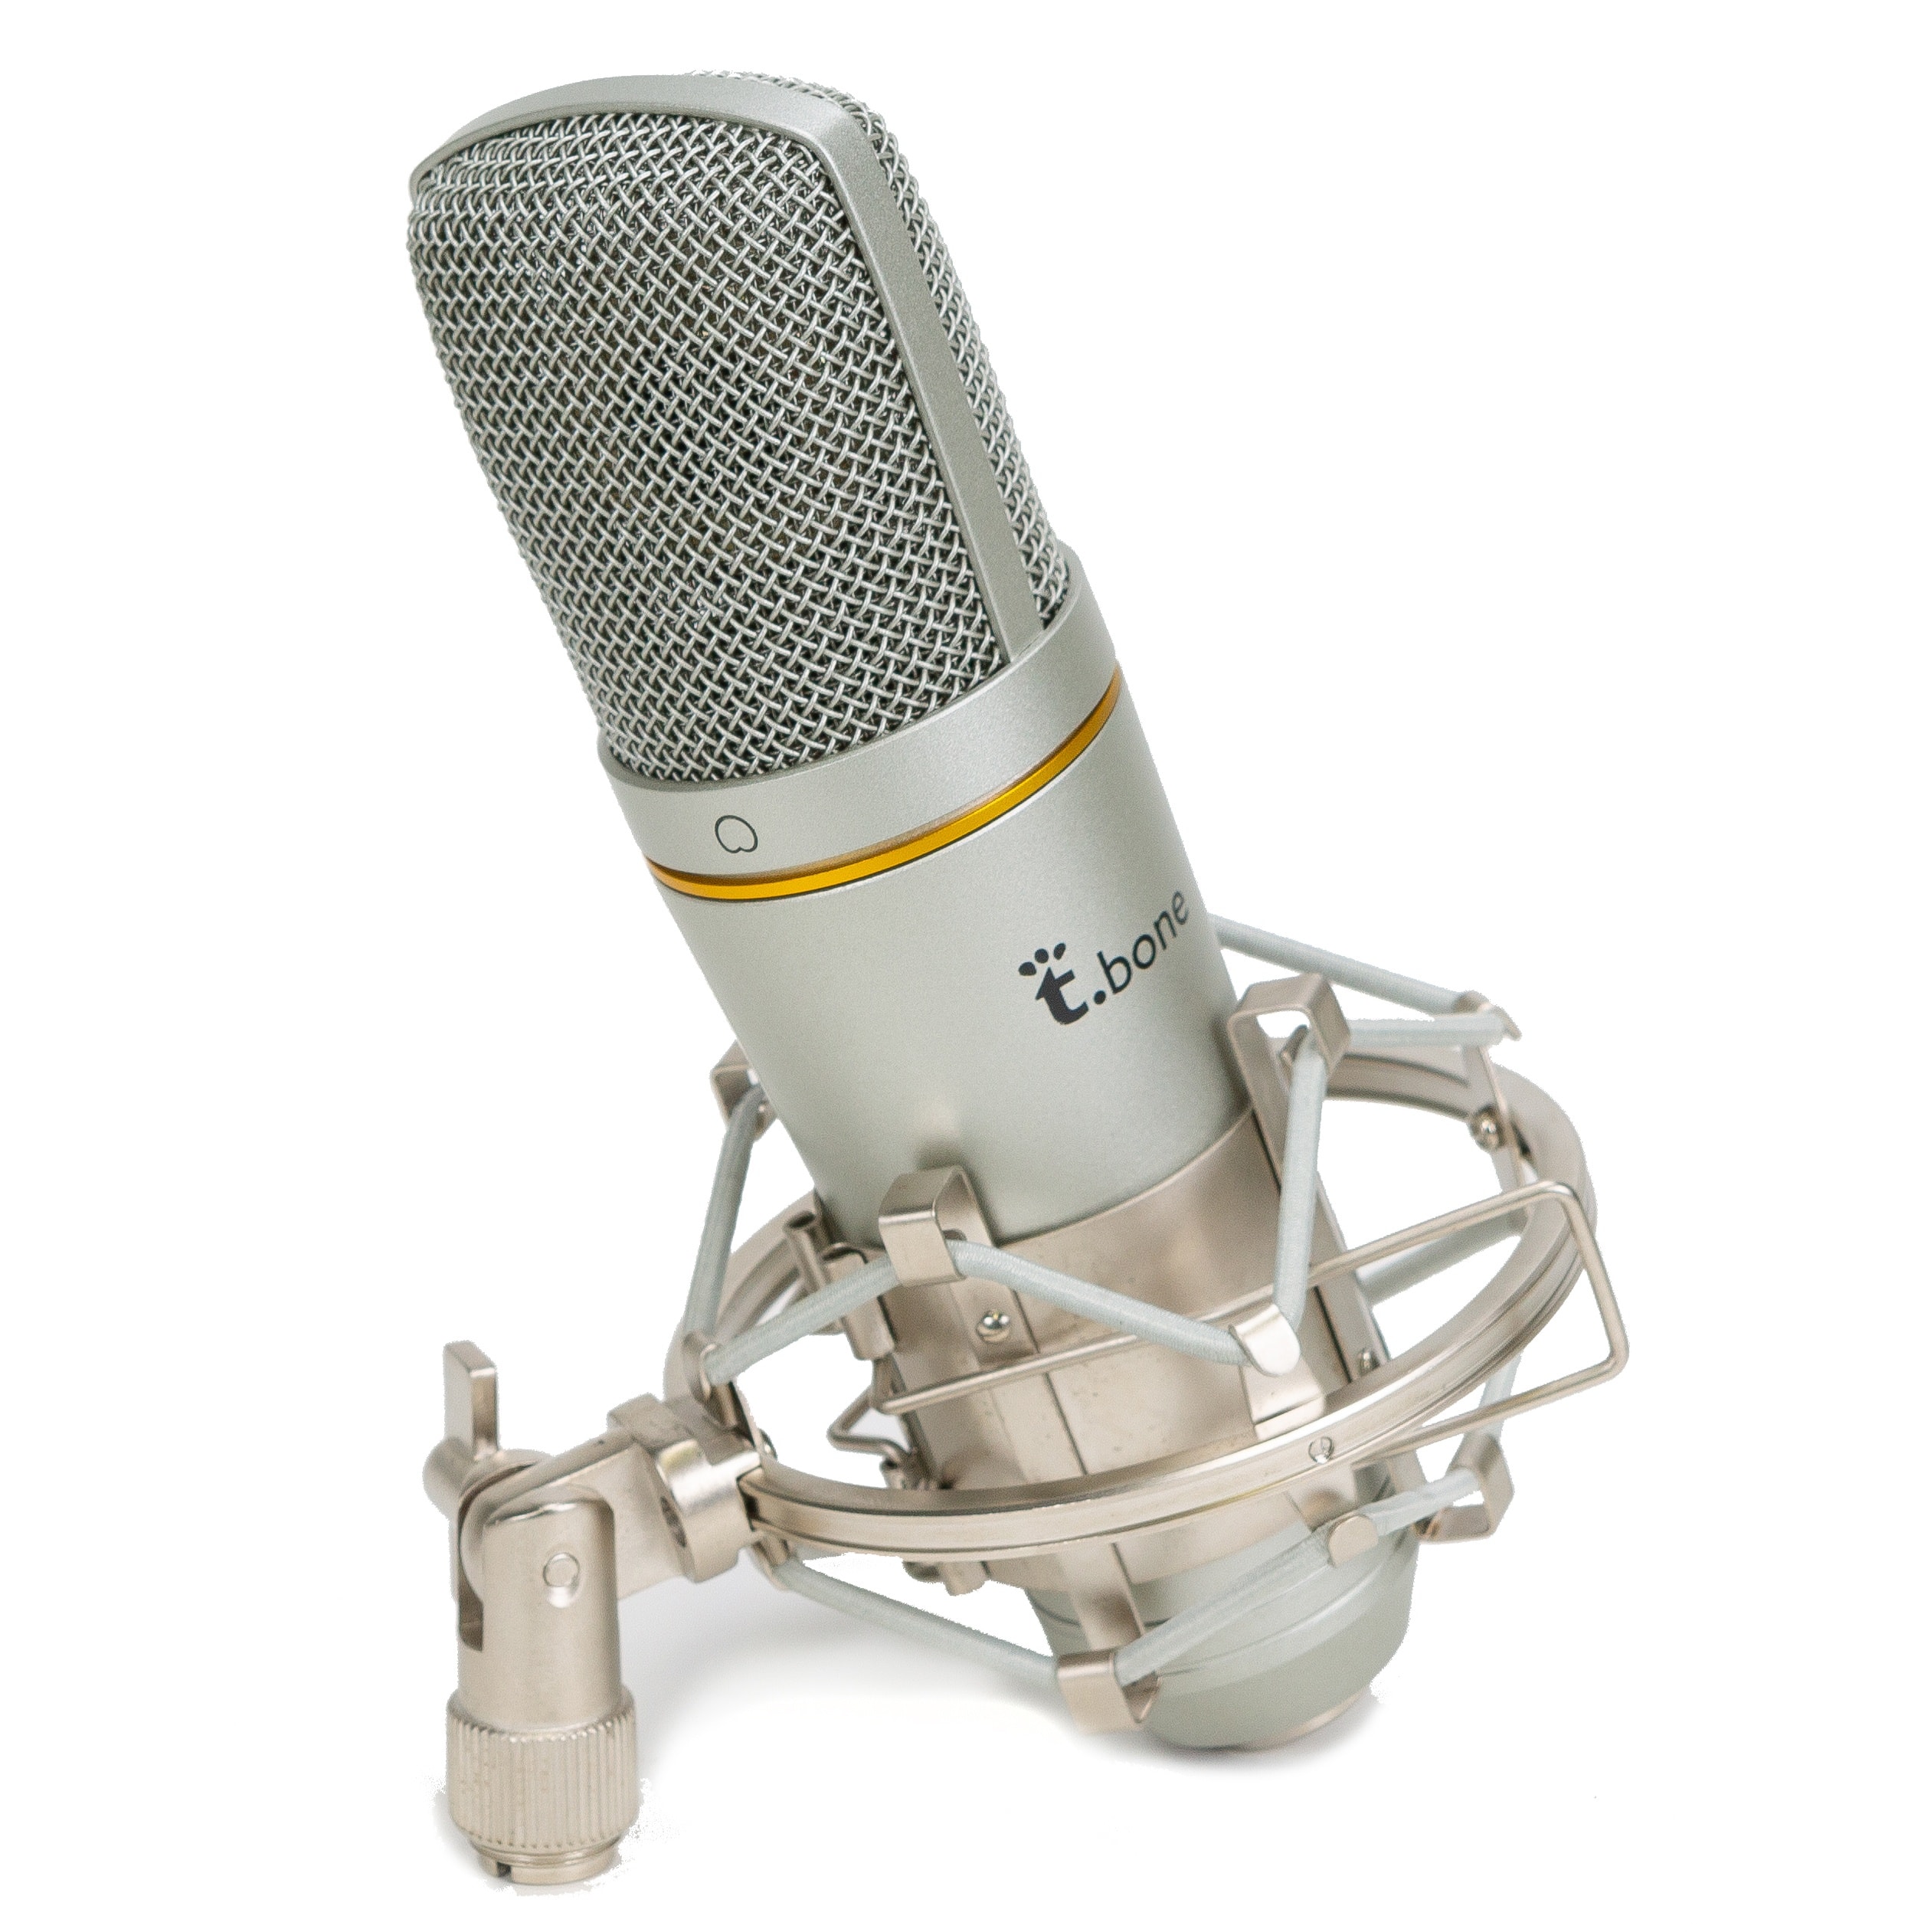 The T.bone SC440 (USB Studio Kondensator Mikrofon) Medienzentrum Heidelberg